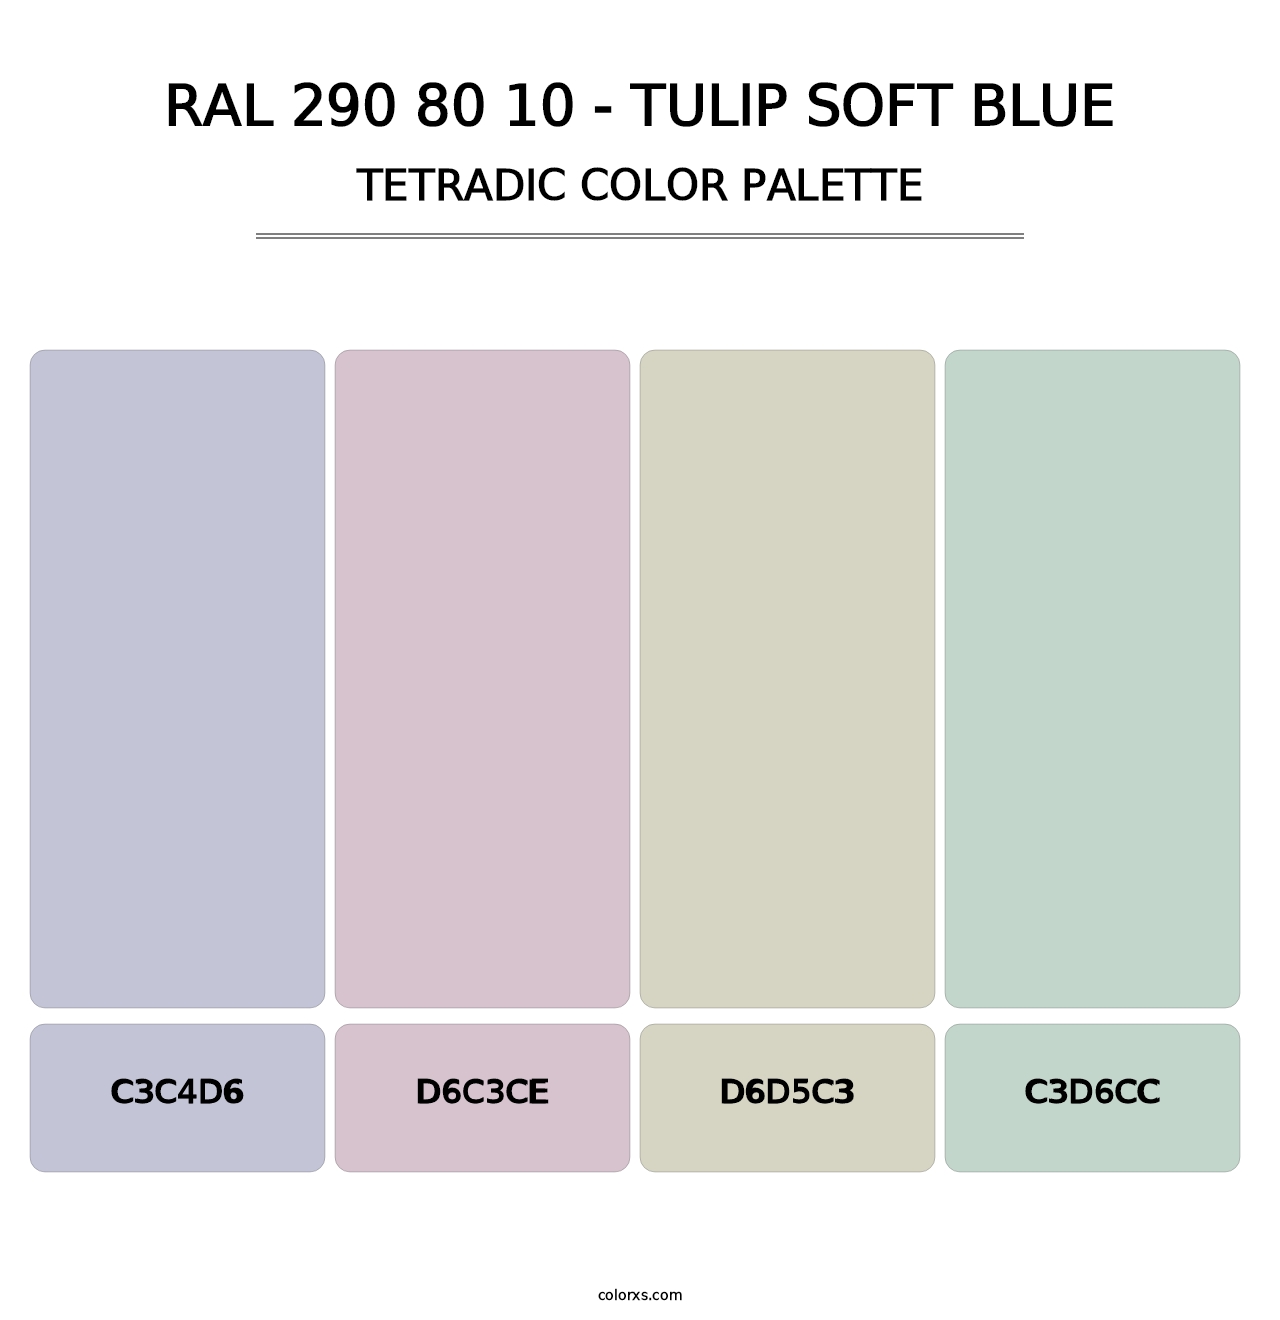 RAL 290 80 10 - Tulip Soft Blue - Tetradic Color Palette